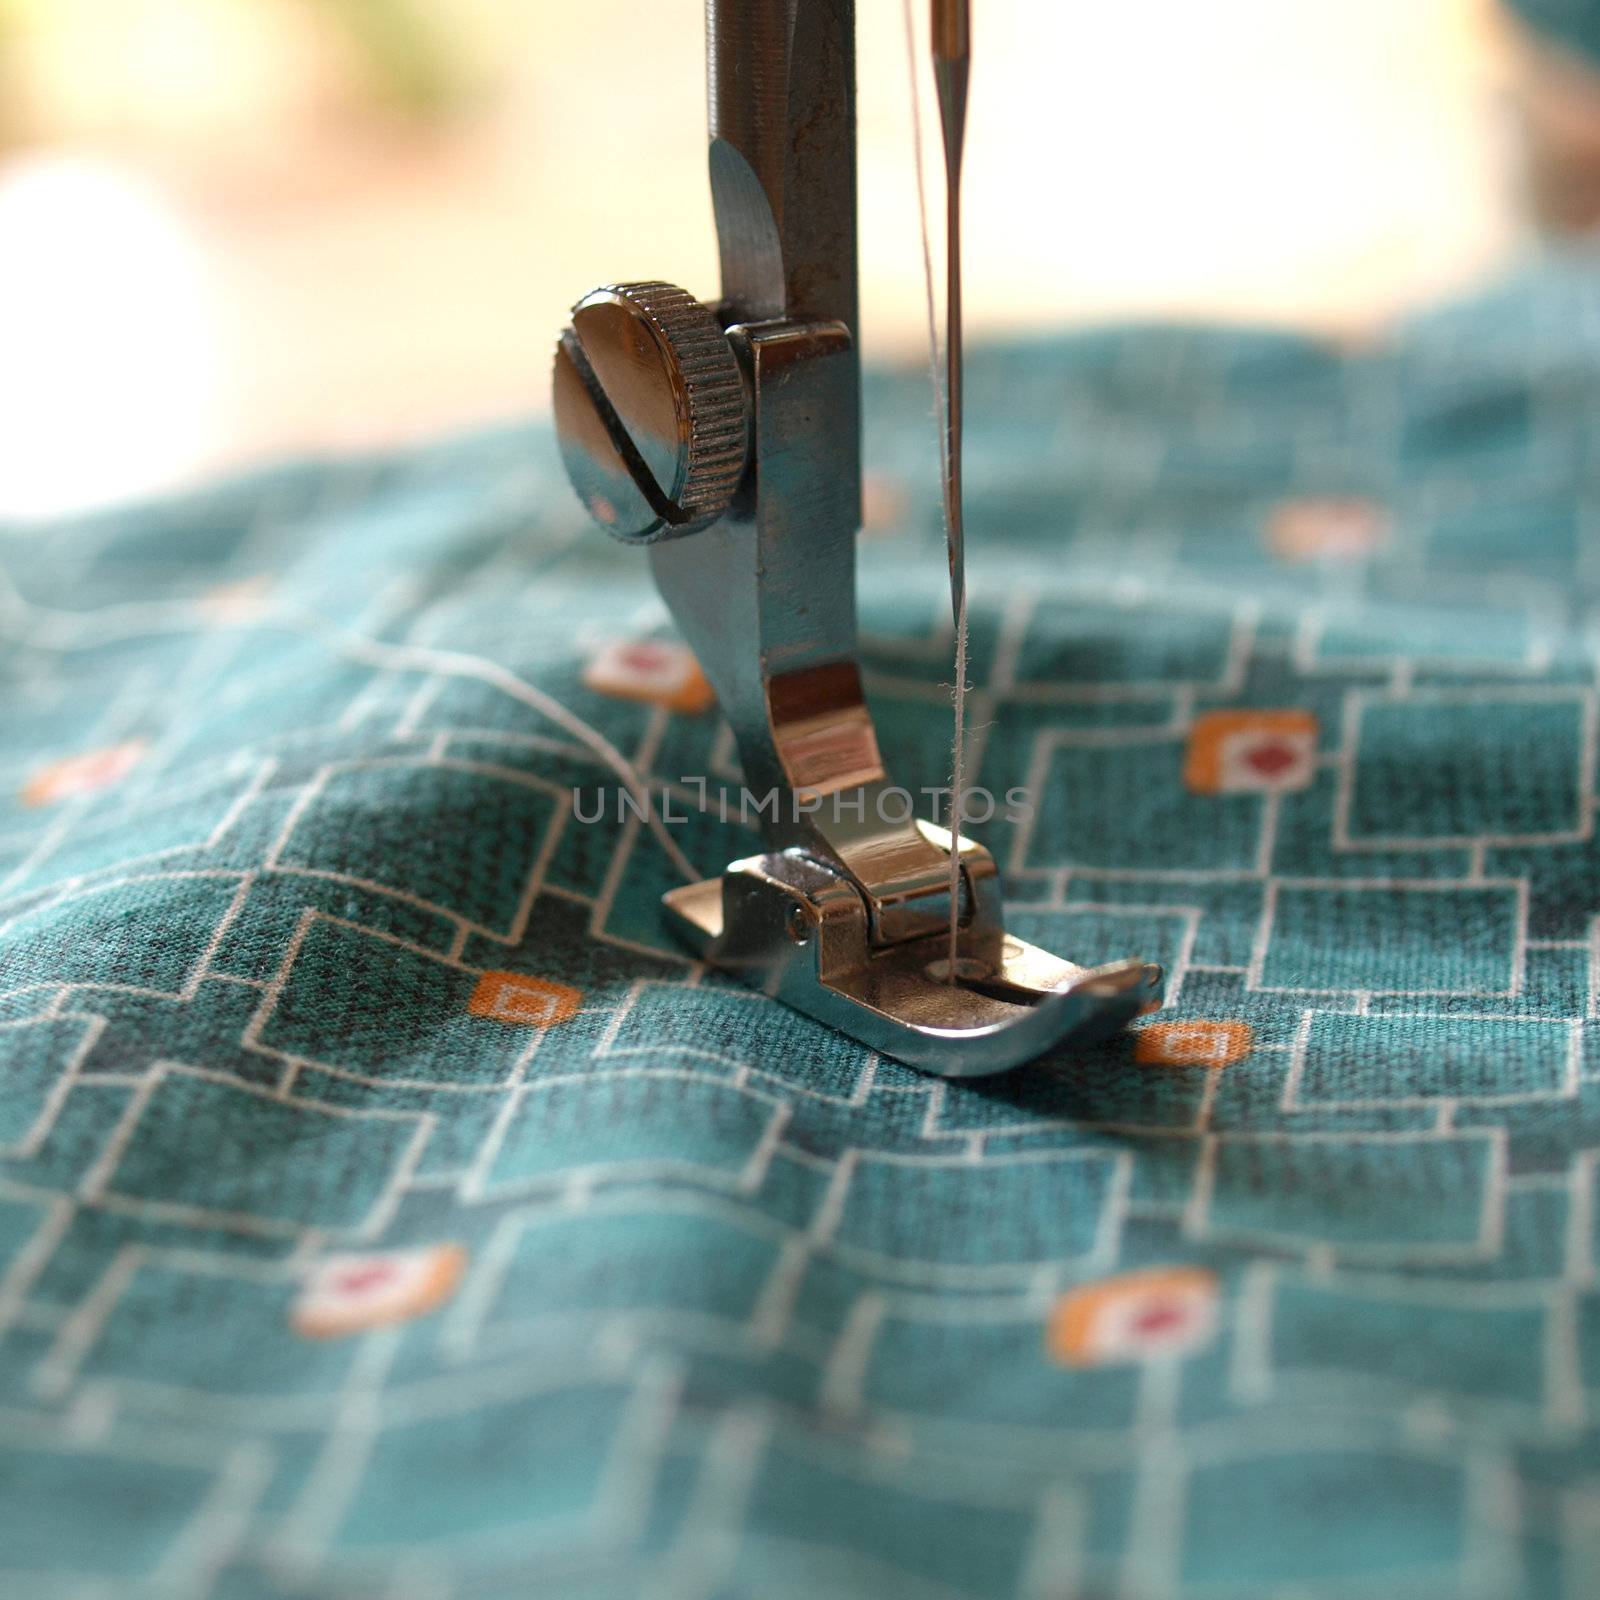 Sewing machine by claudiodivizia